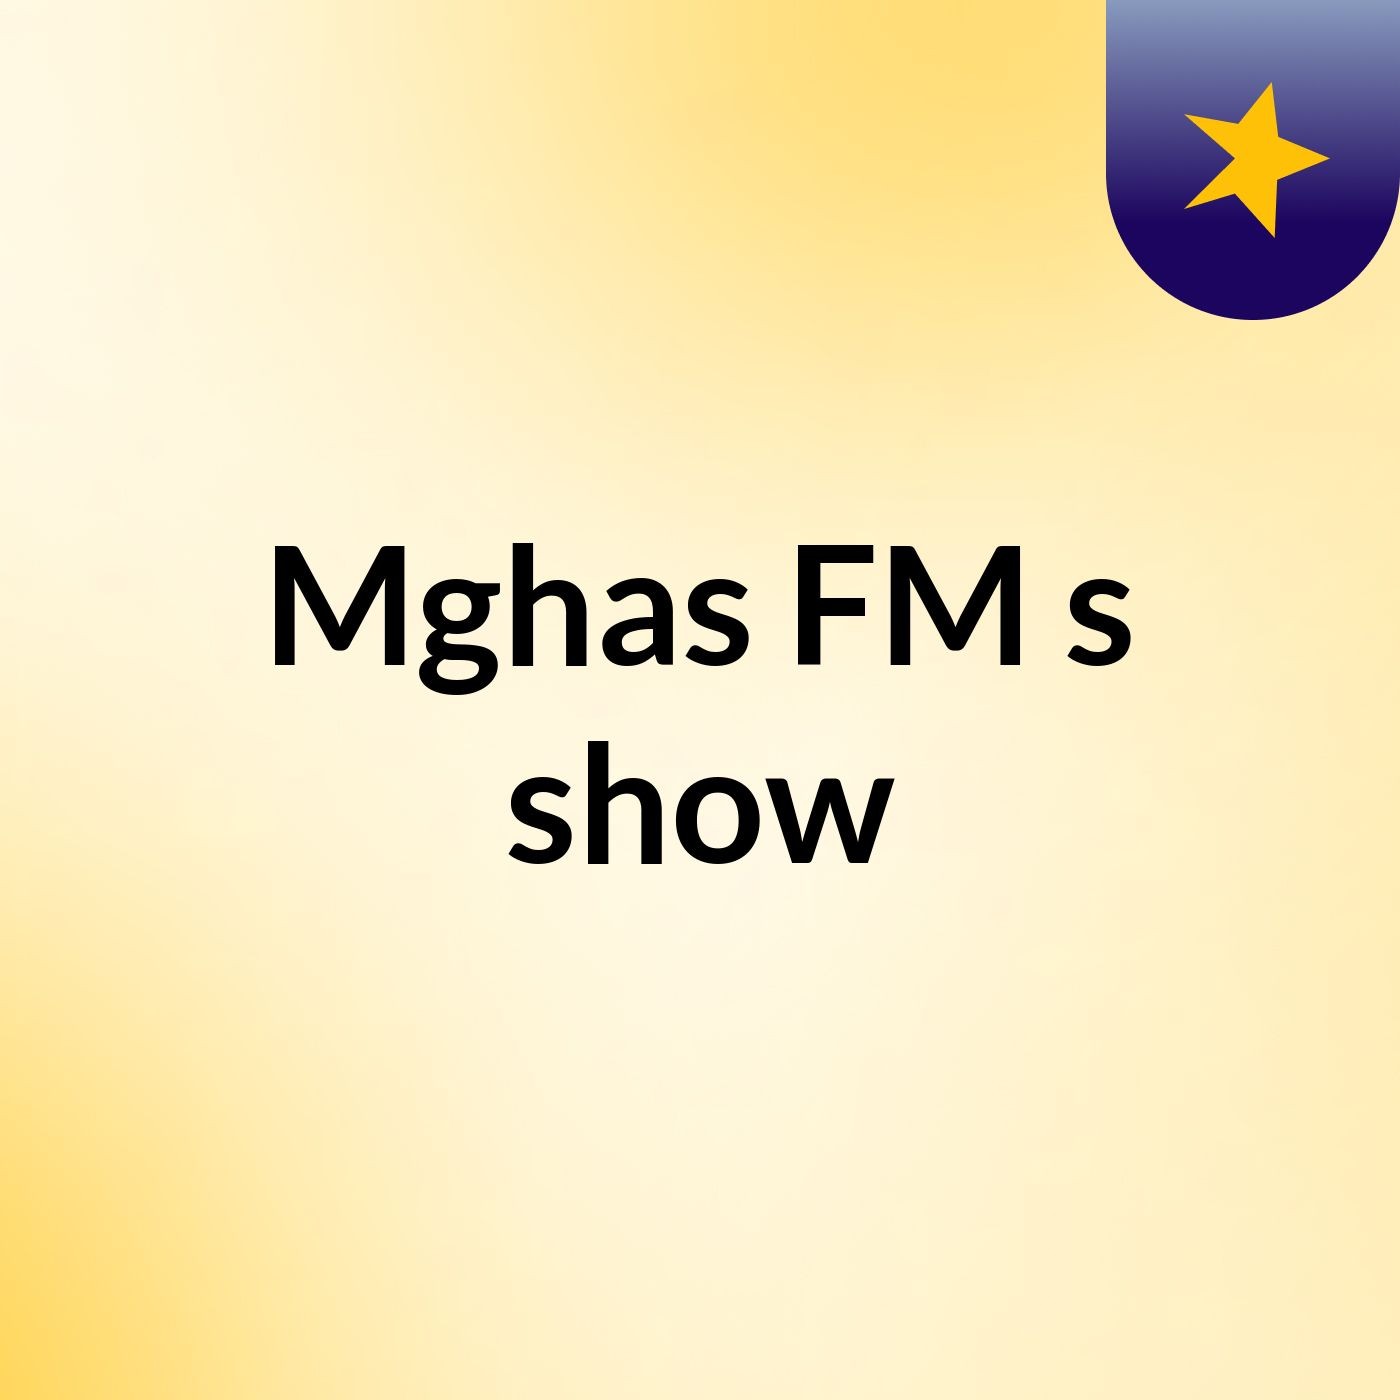 Mghas FM's show